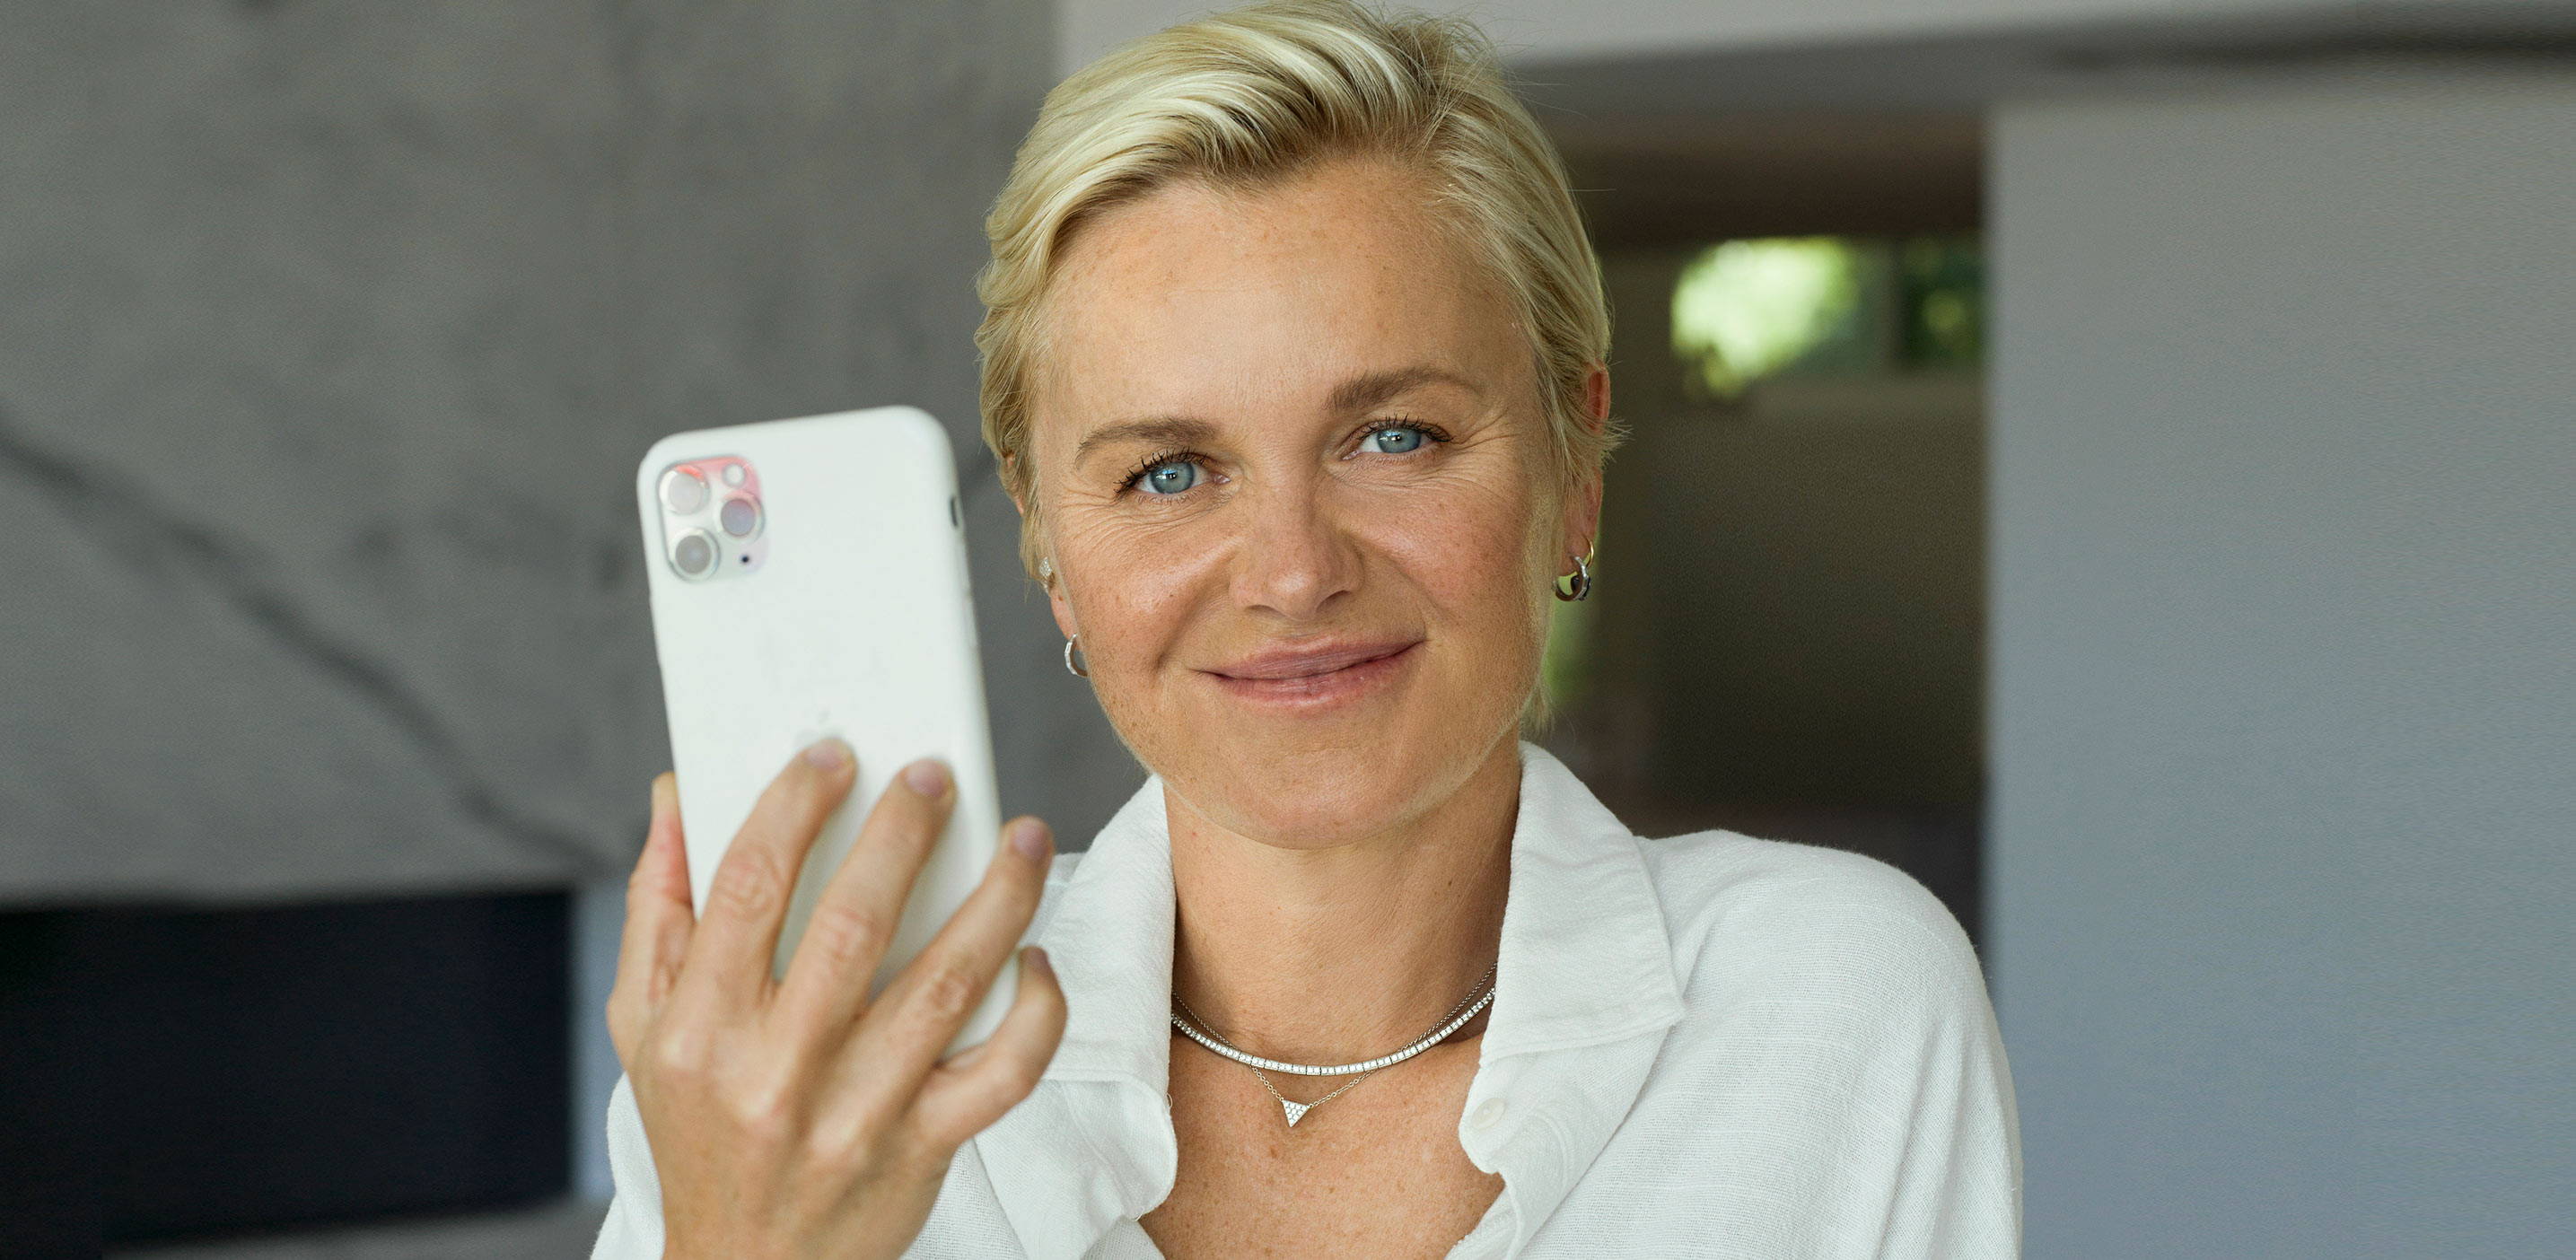 Dr. Barbara Sturm holding white iphone